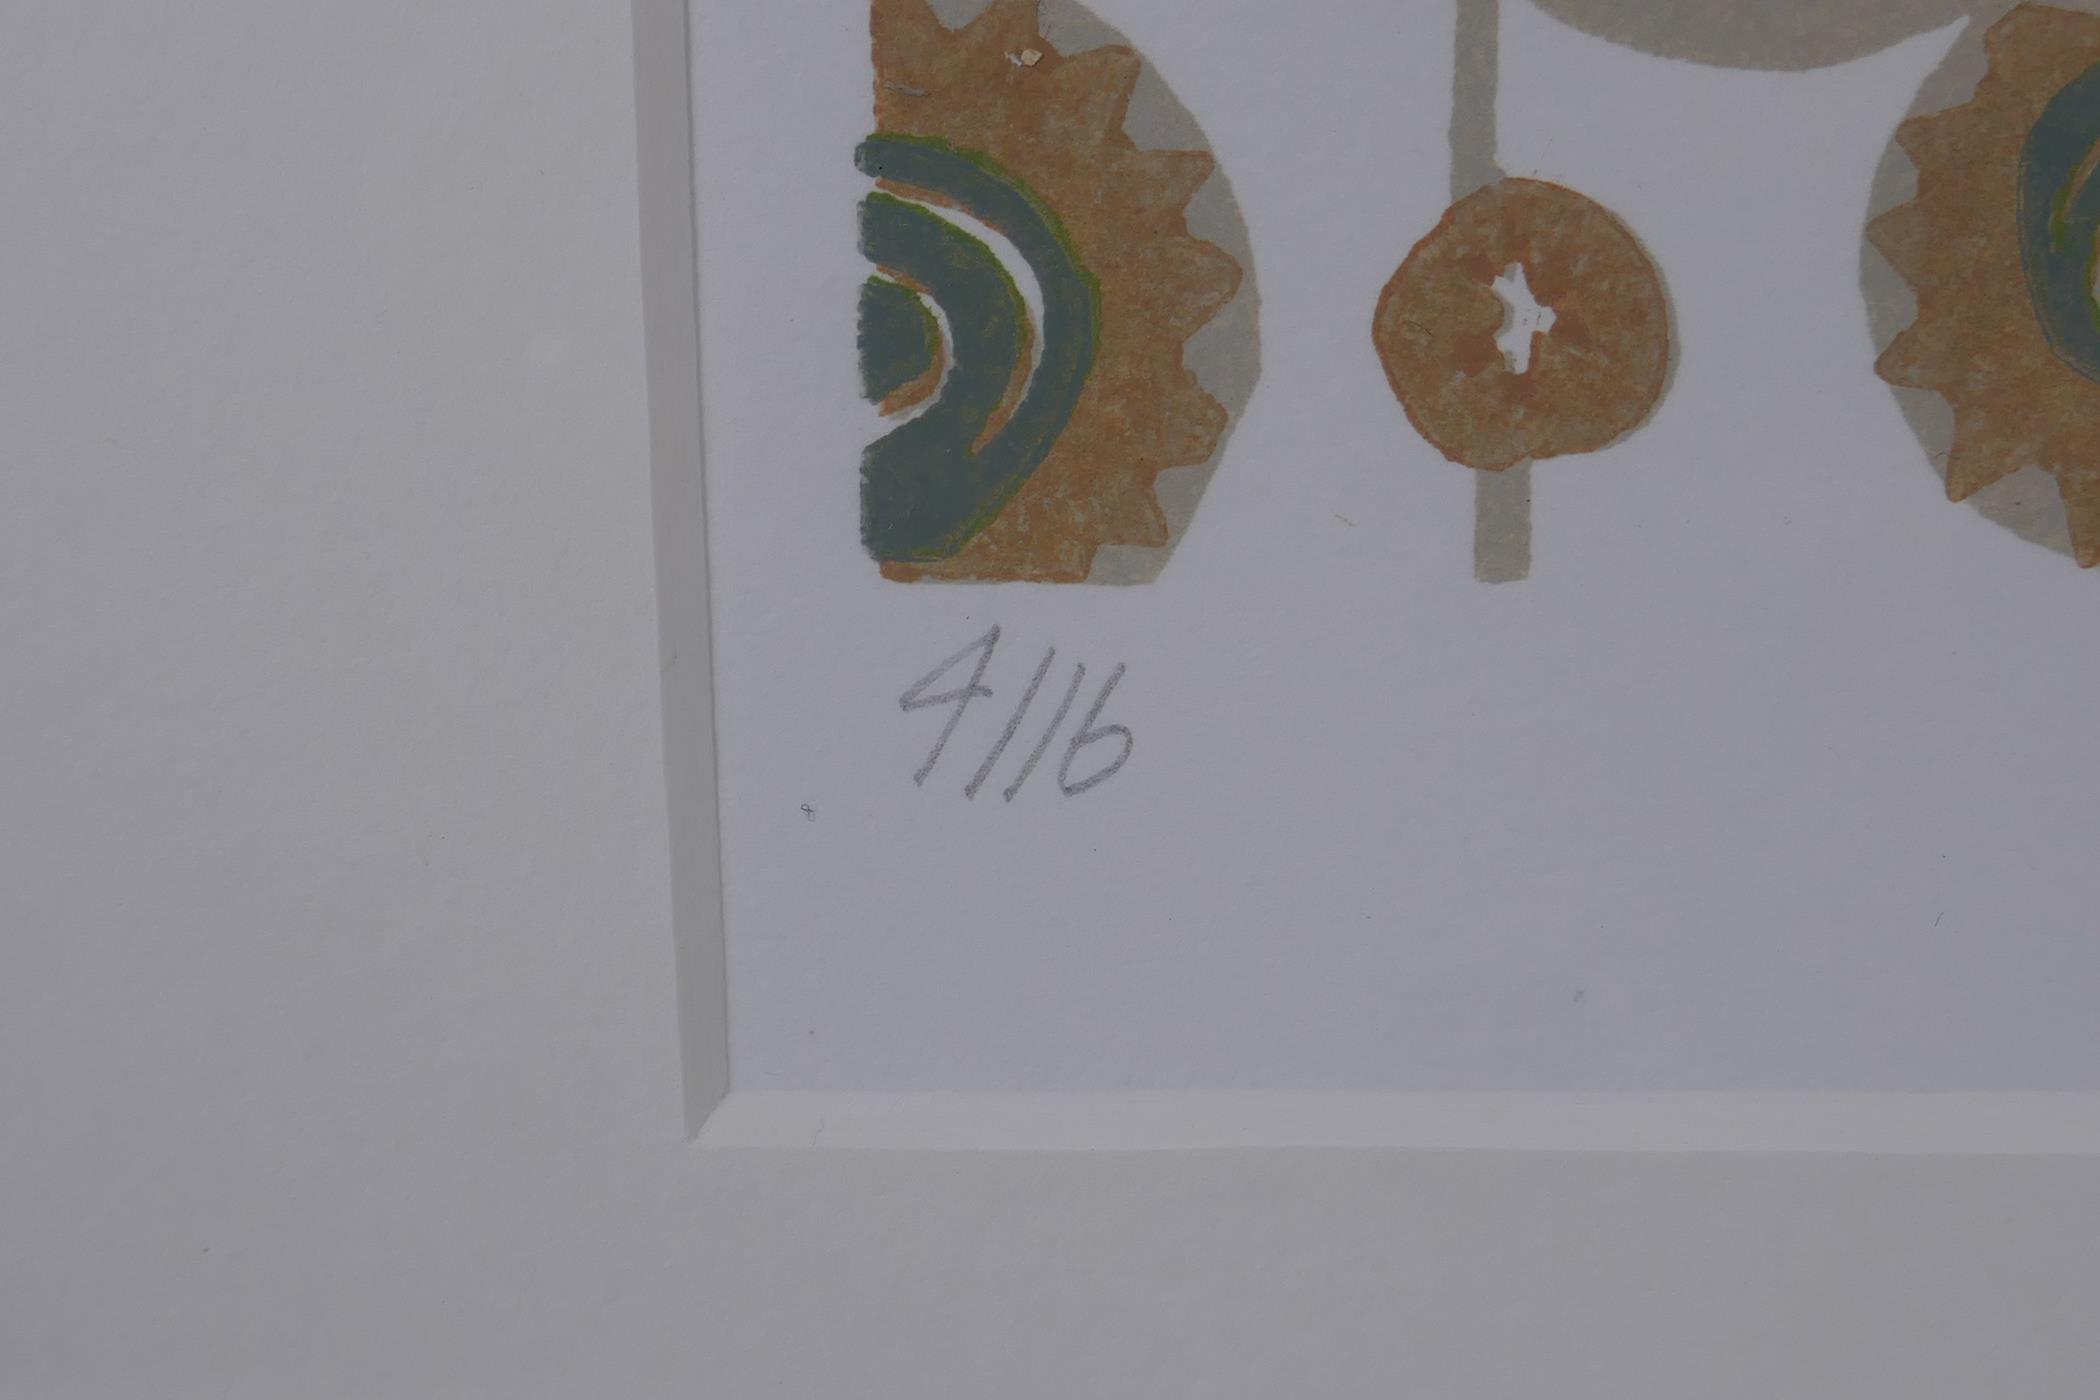 Jane Walker, Scottish, Snow & Apples, limited edition lino cut still life print, 4/16, pencil signed - Image 5 of 8